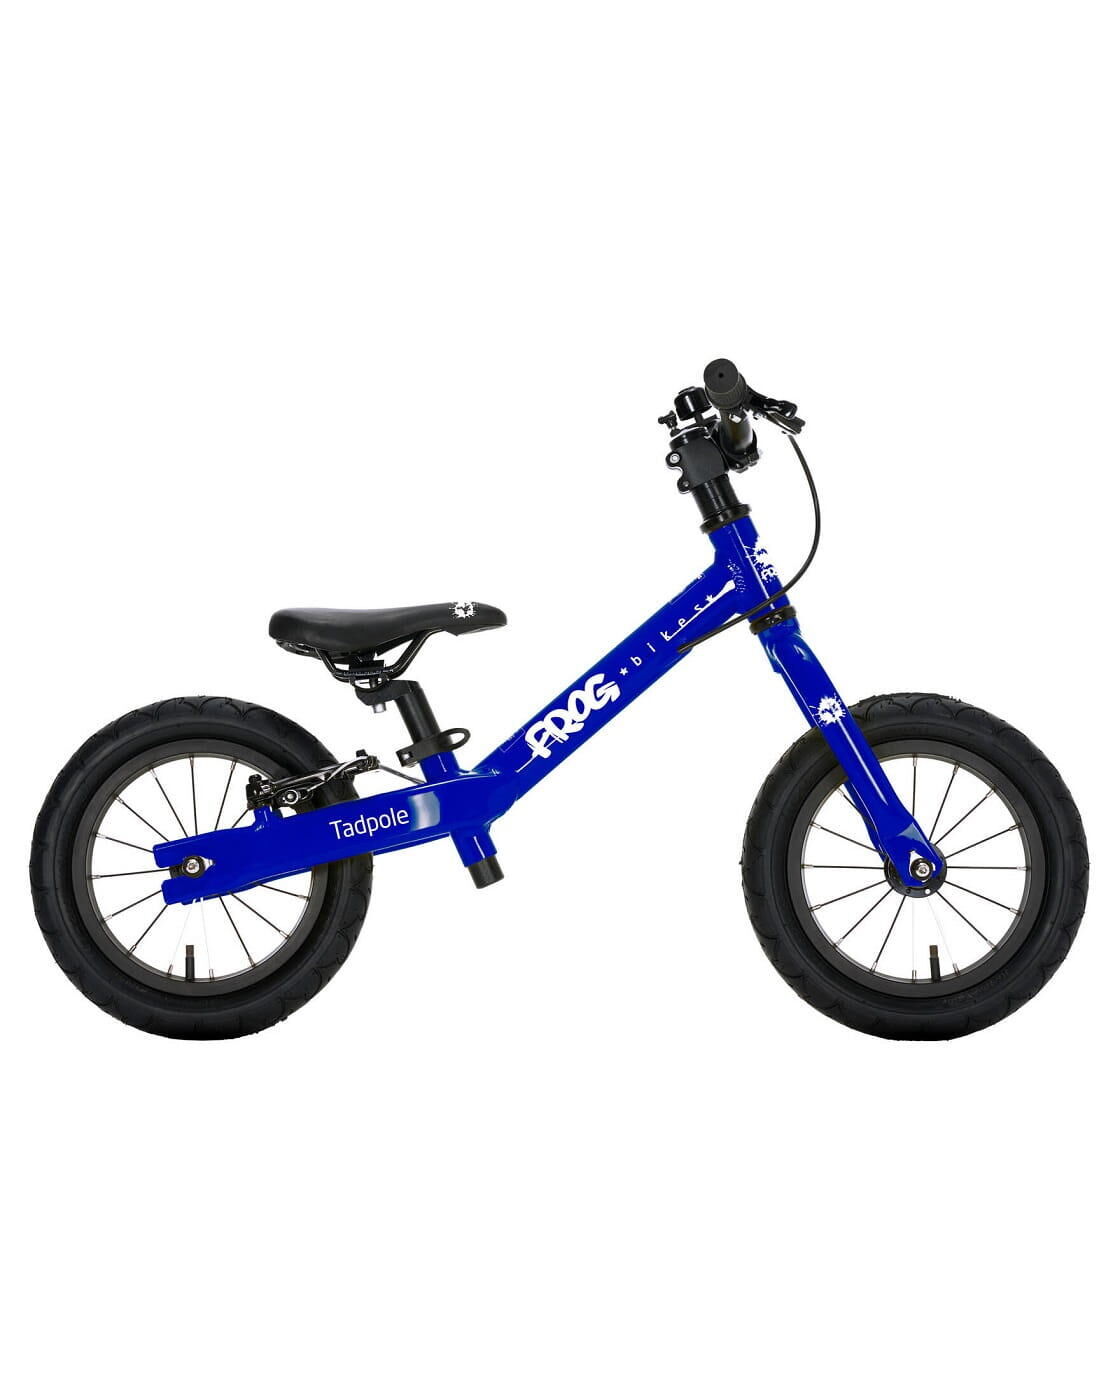 FROG BIKES Tadpole 12 Inch Lightweight Kids Balance Bike For 2-3 Years - Electric Blue